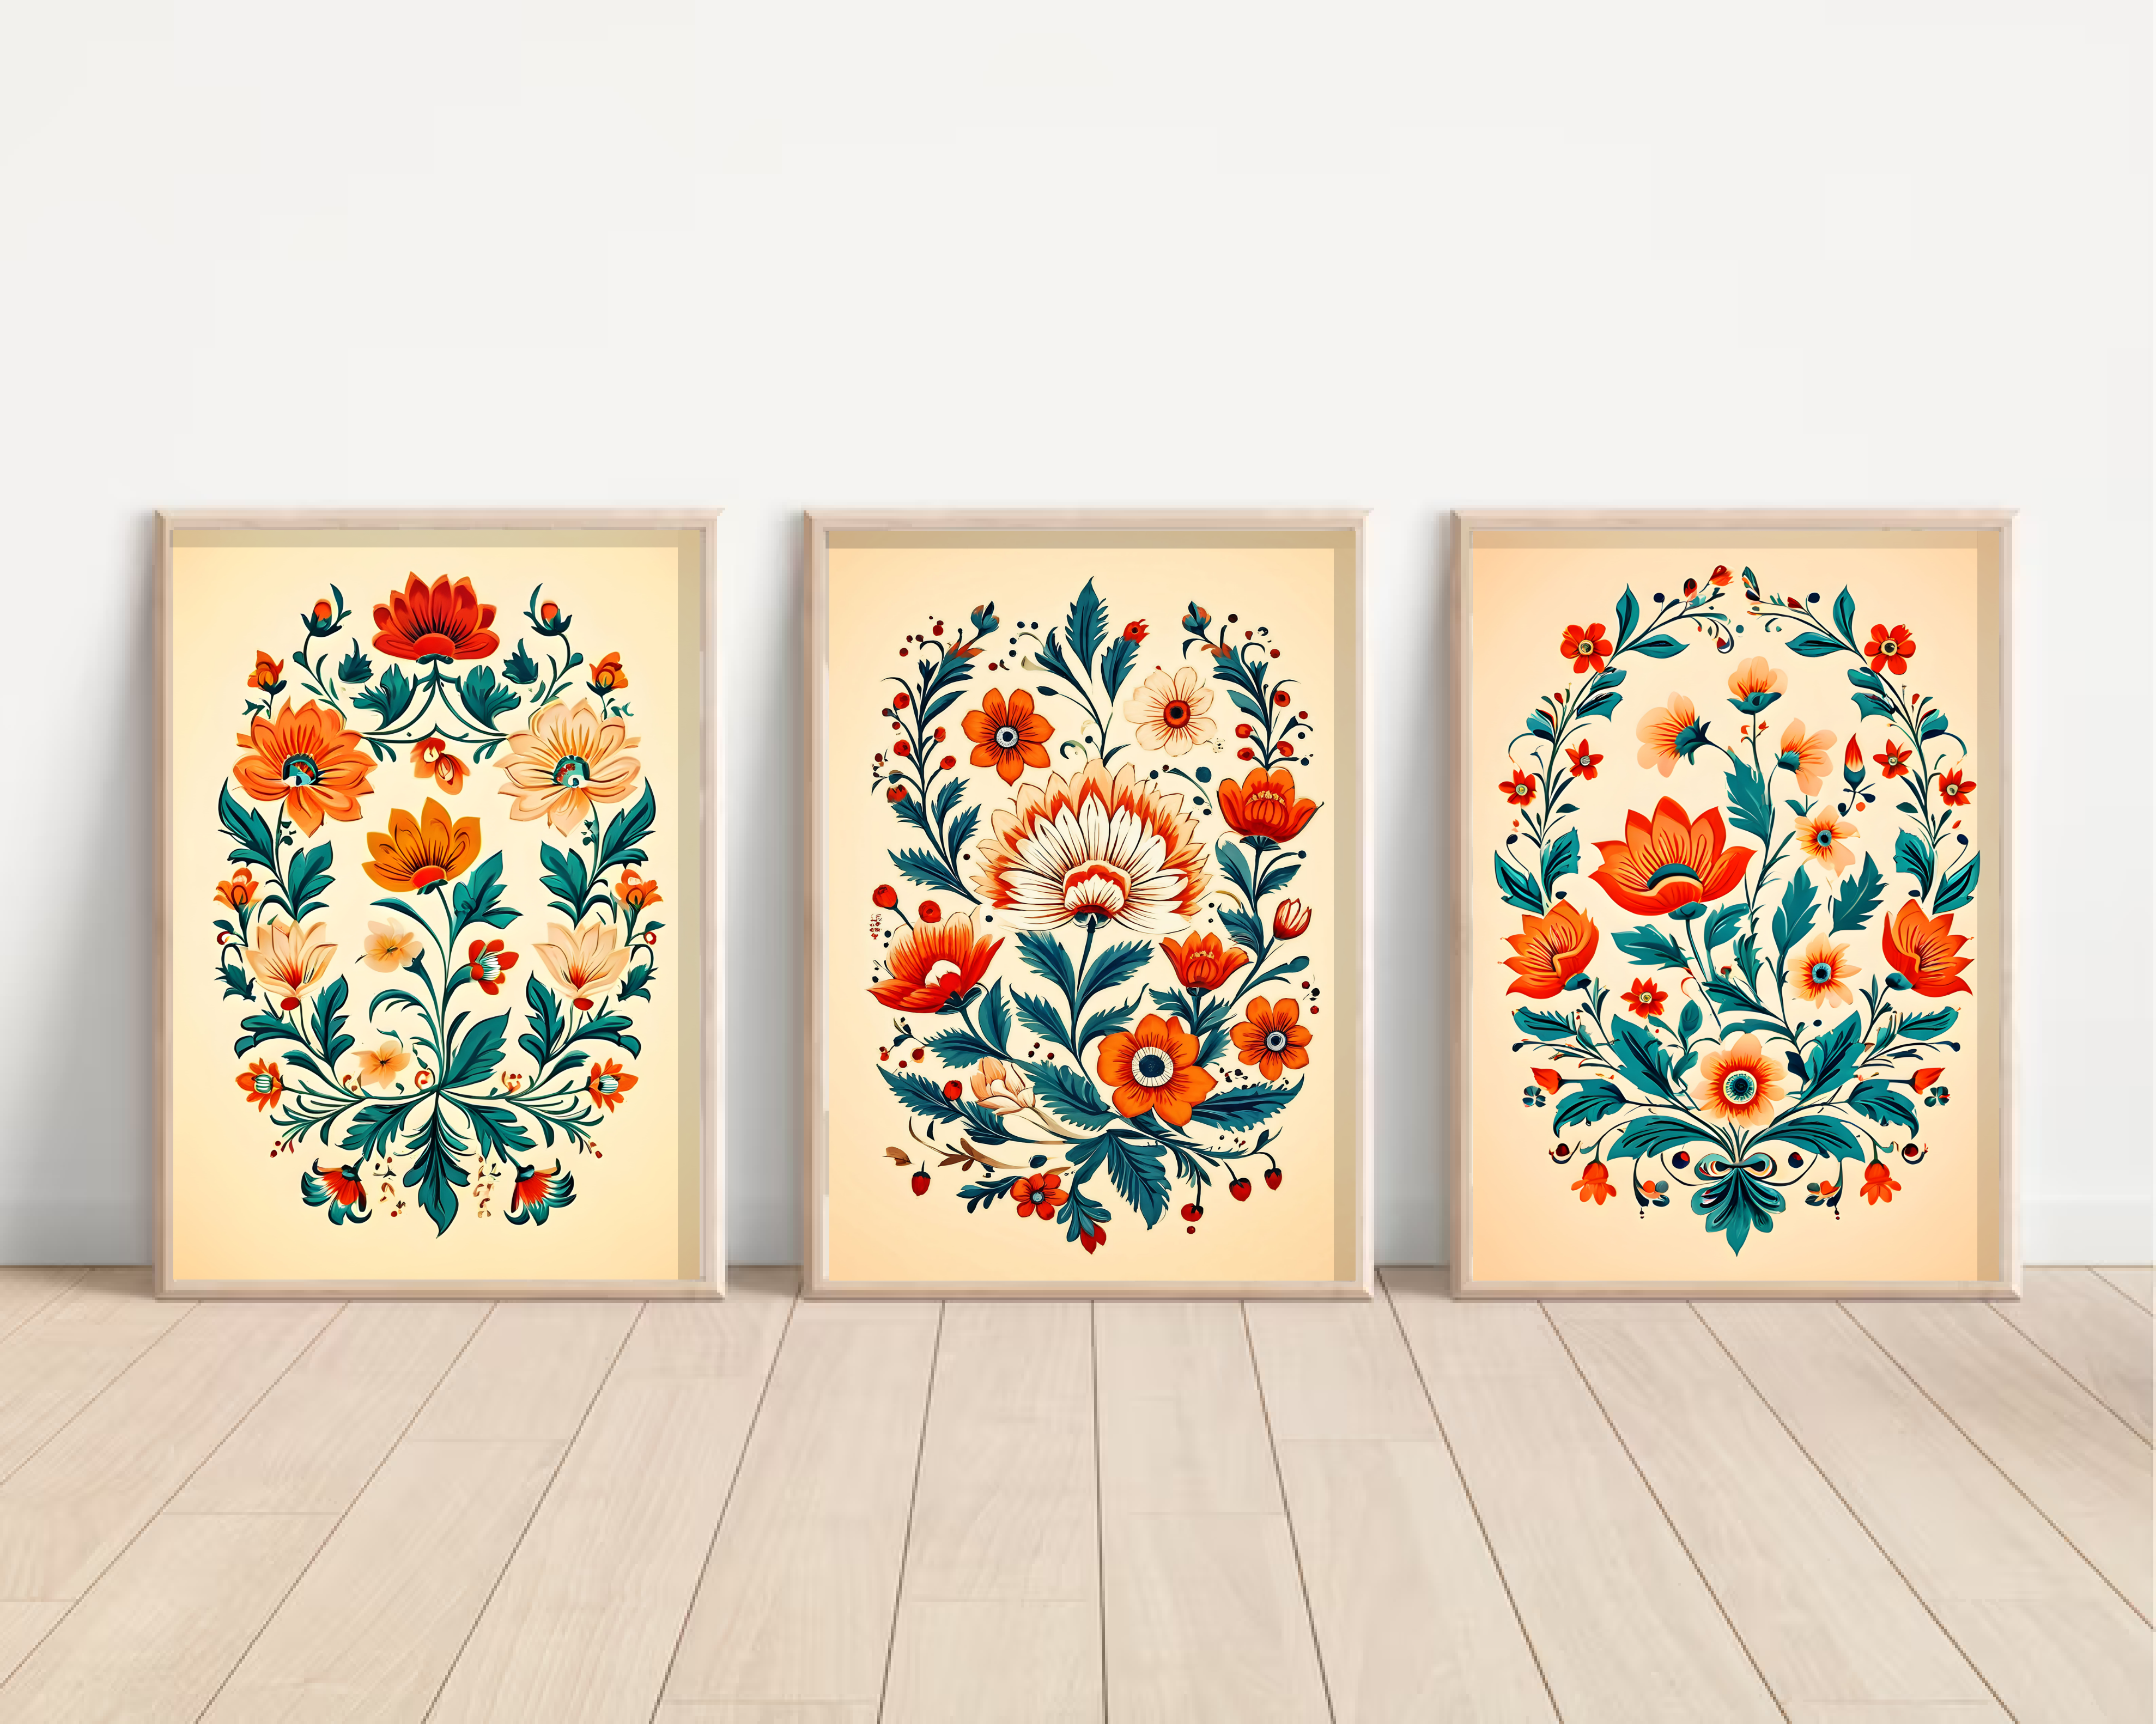 Indian Art, Indian traditional Floral Style Art, Folk Art Print, Floral Art Set of 3